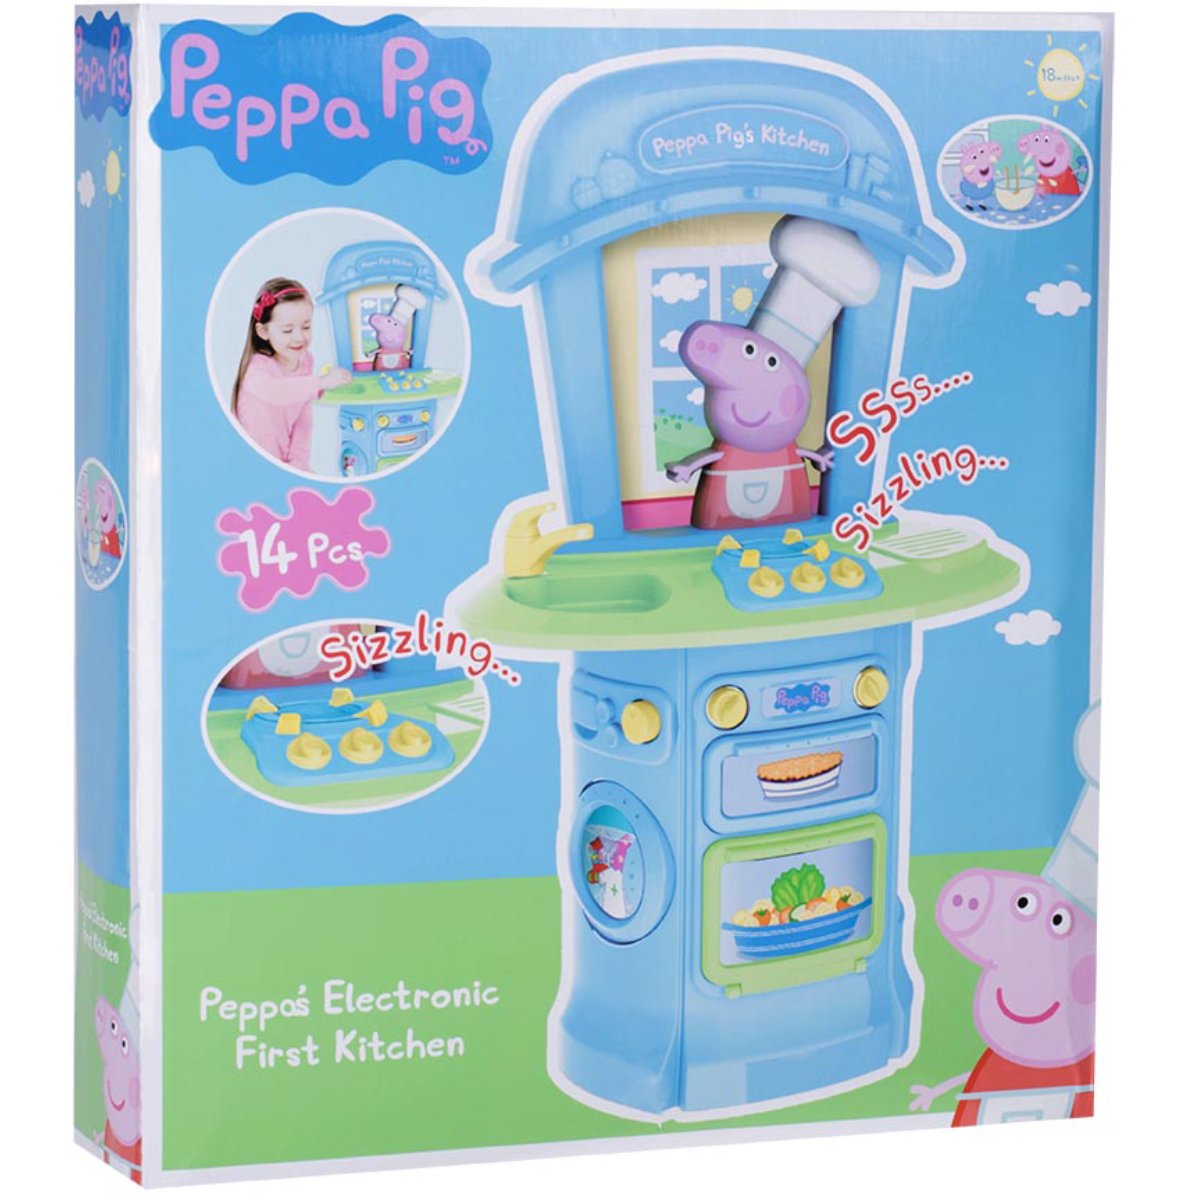 Prima mea bucatarie, Peppa Pig, 14 piese